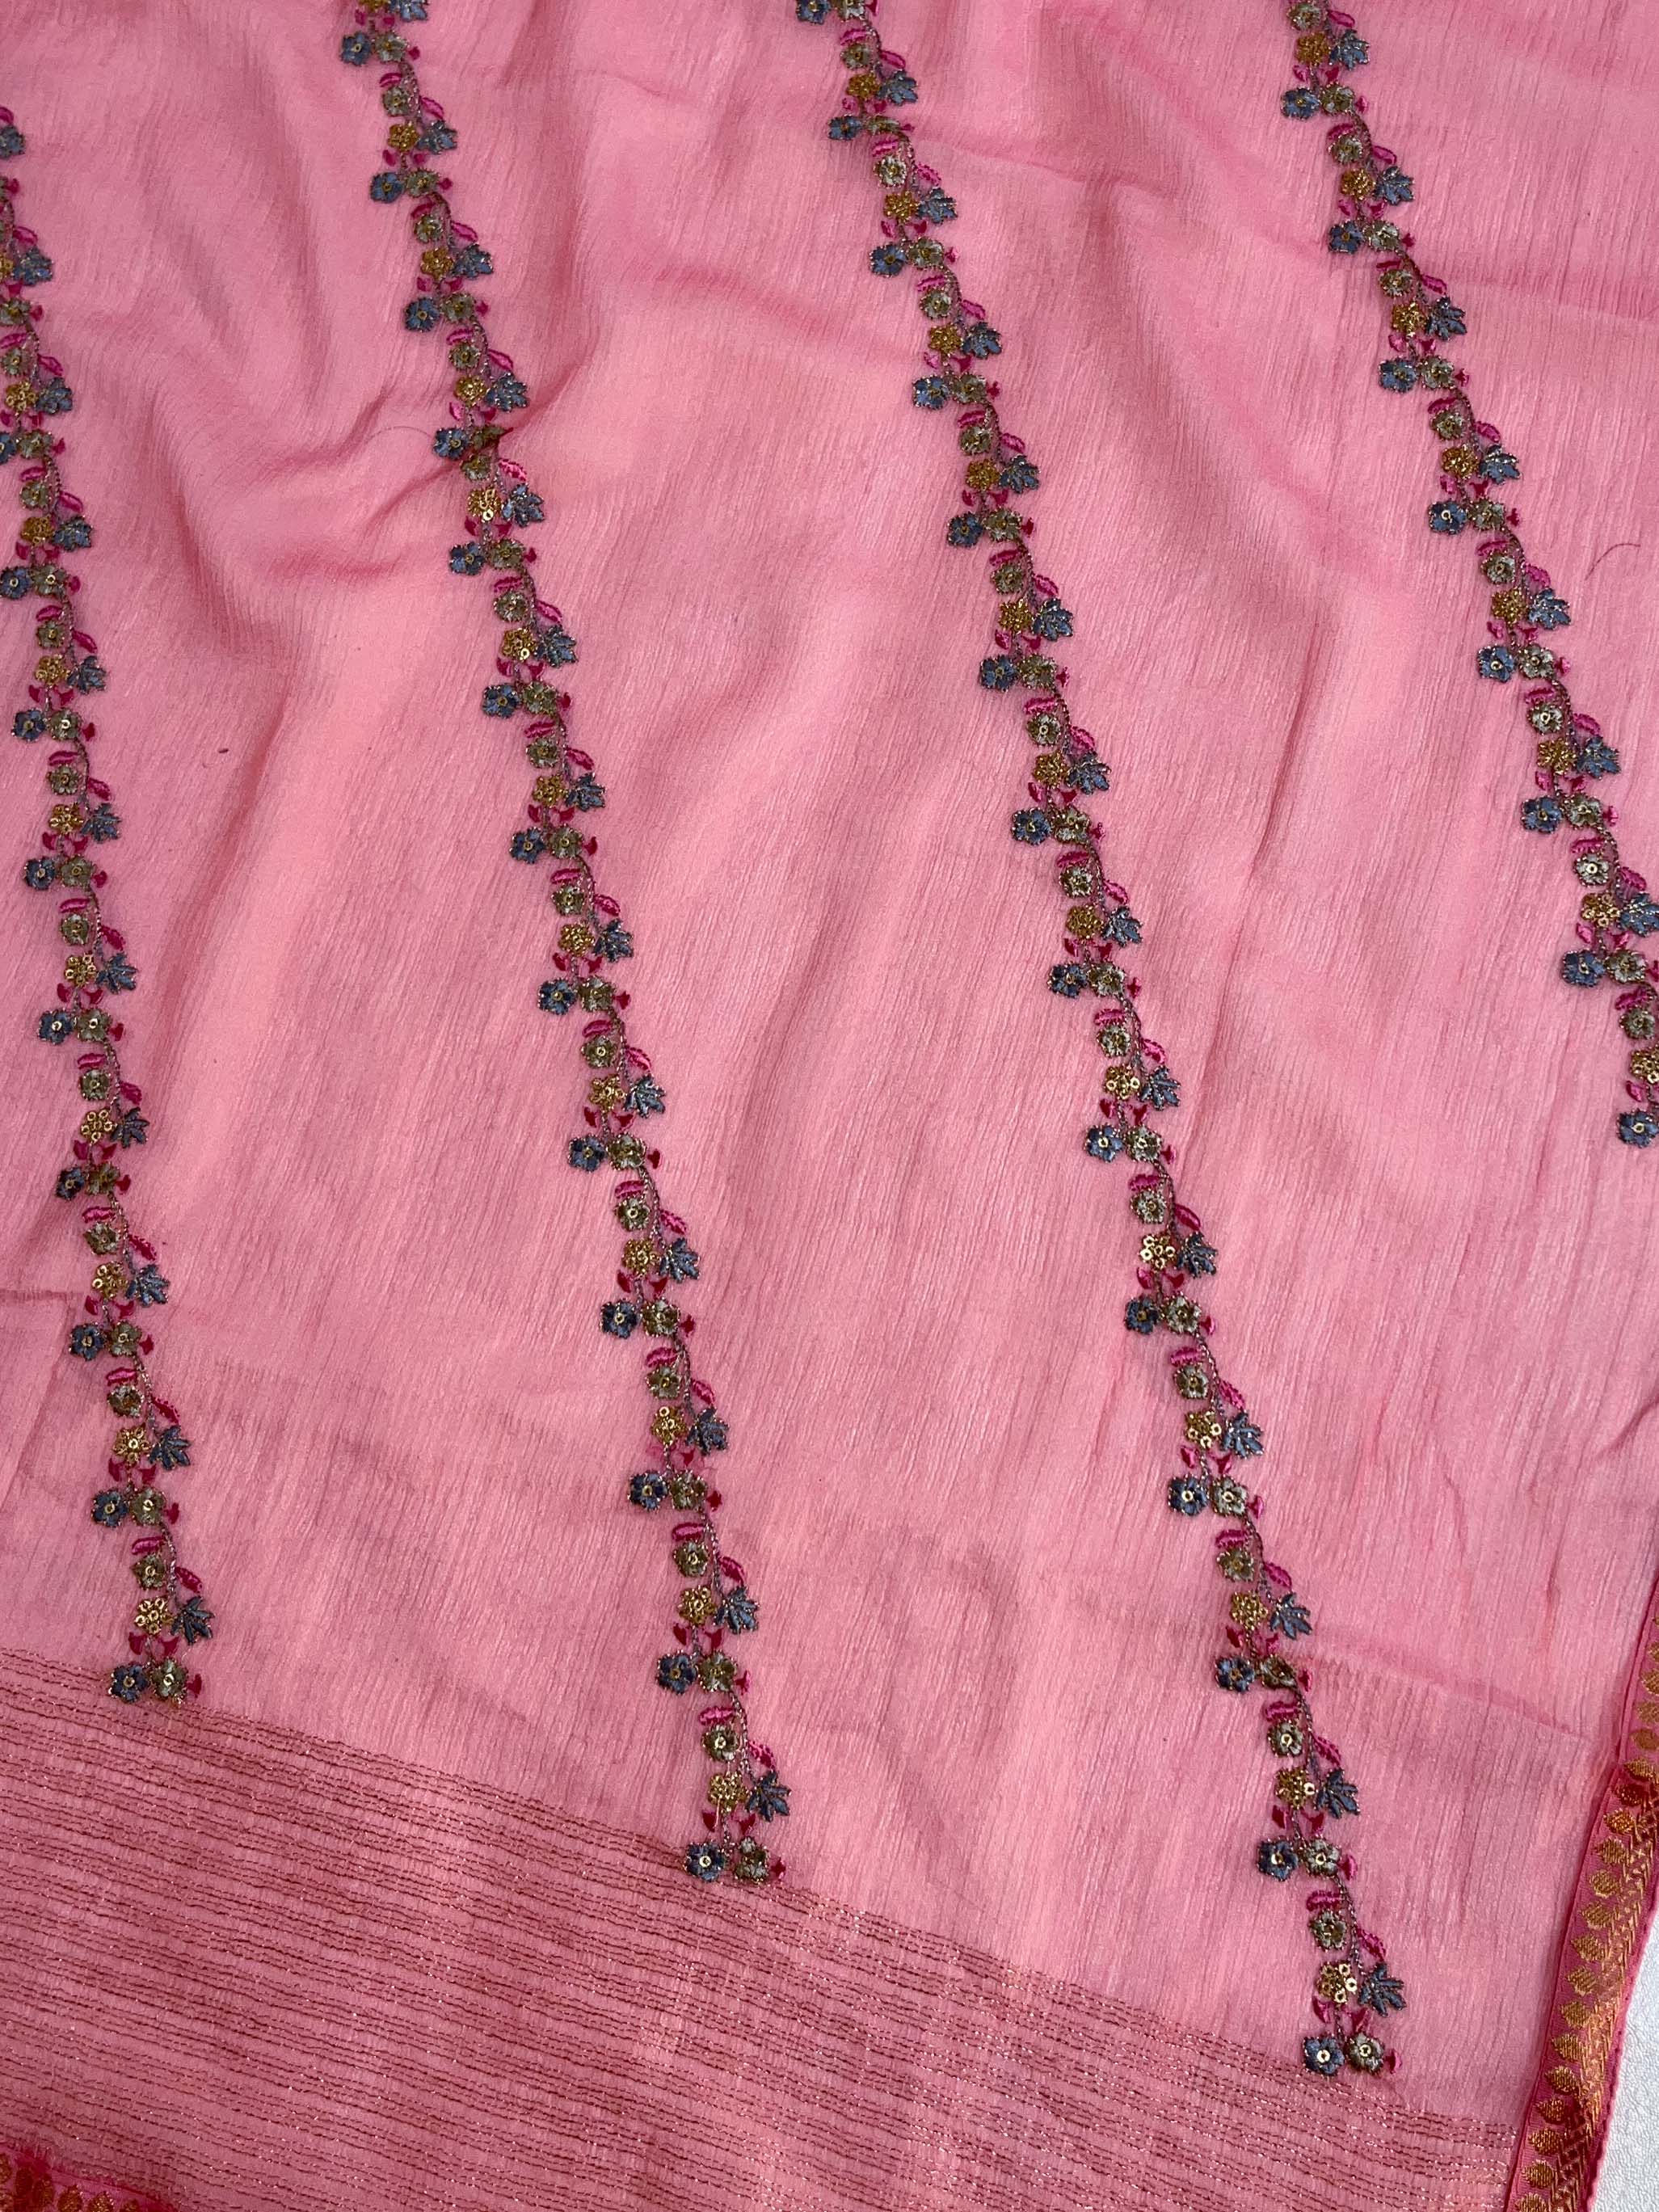 Banarasee Pure Chiffon Saree With Embroidery Work & Thin Banarasee Border-Pink